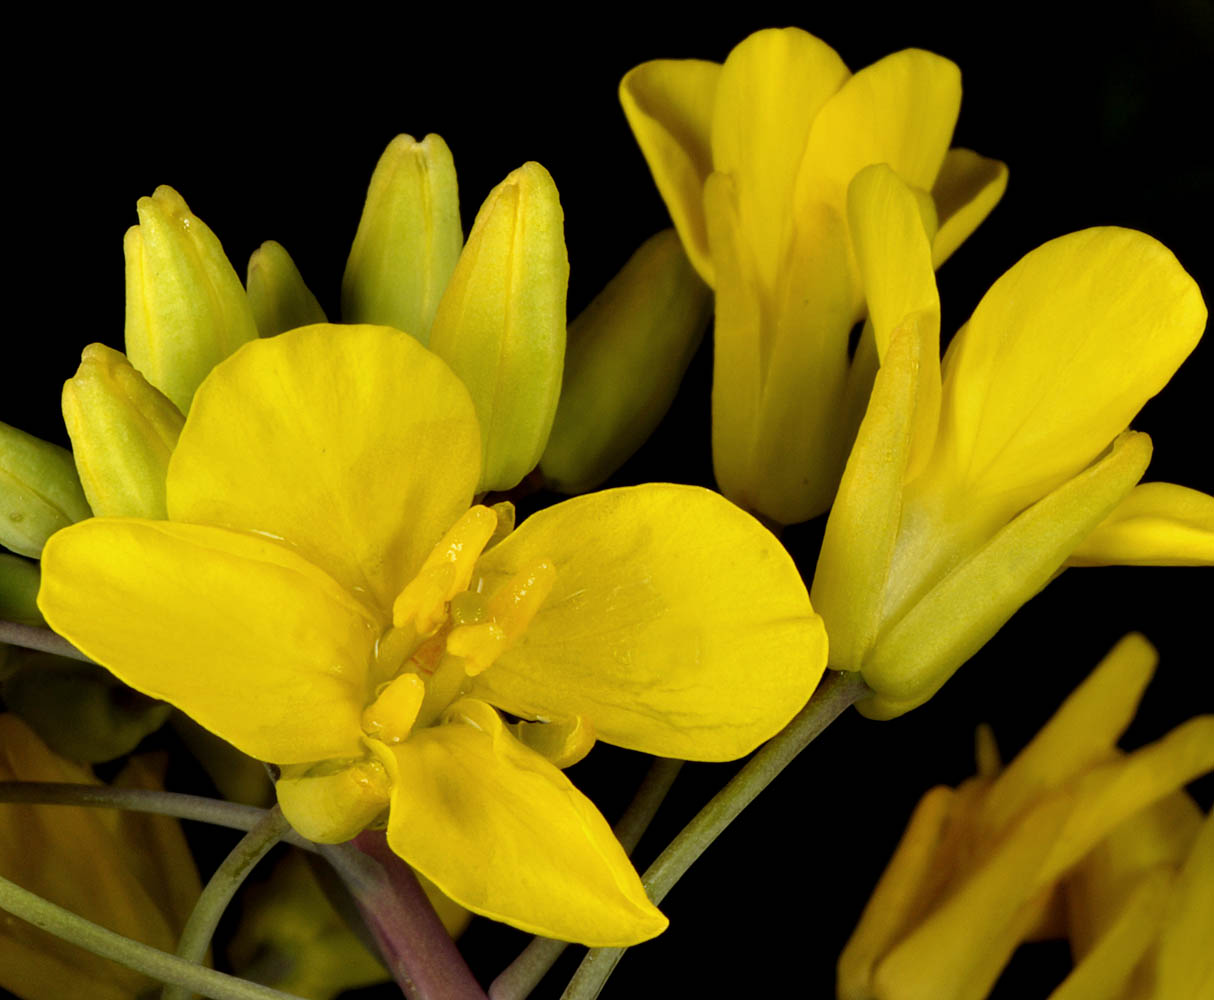 Flora of Eastern Washington Image: Brassica napus